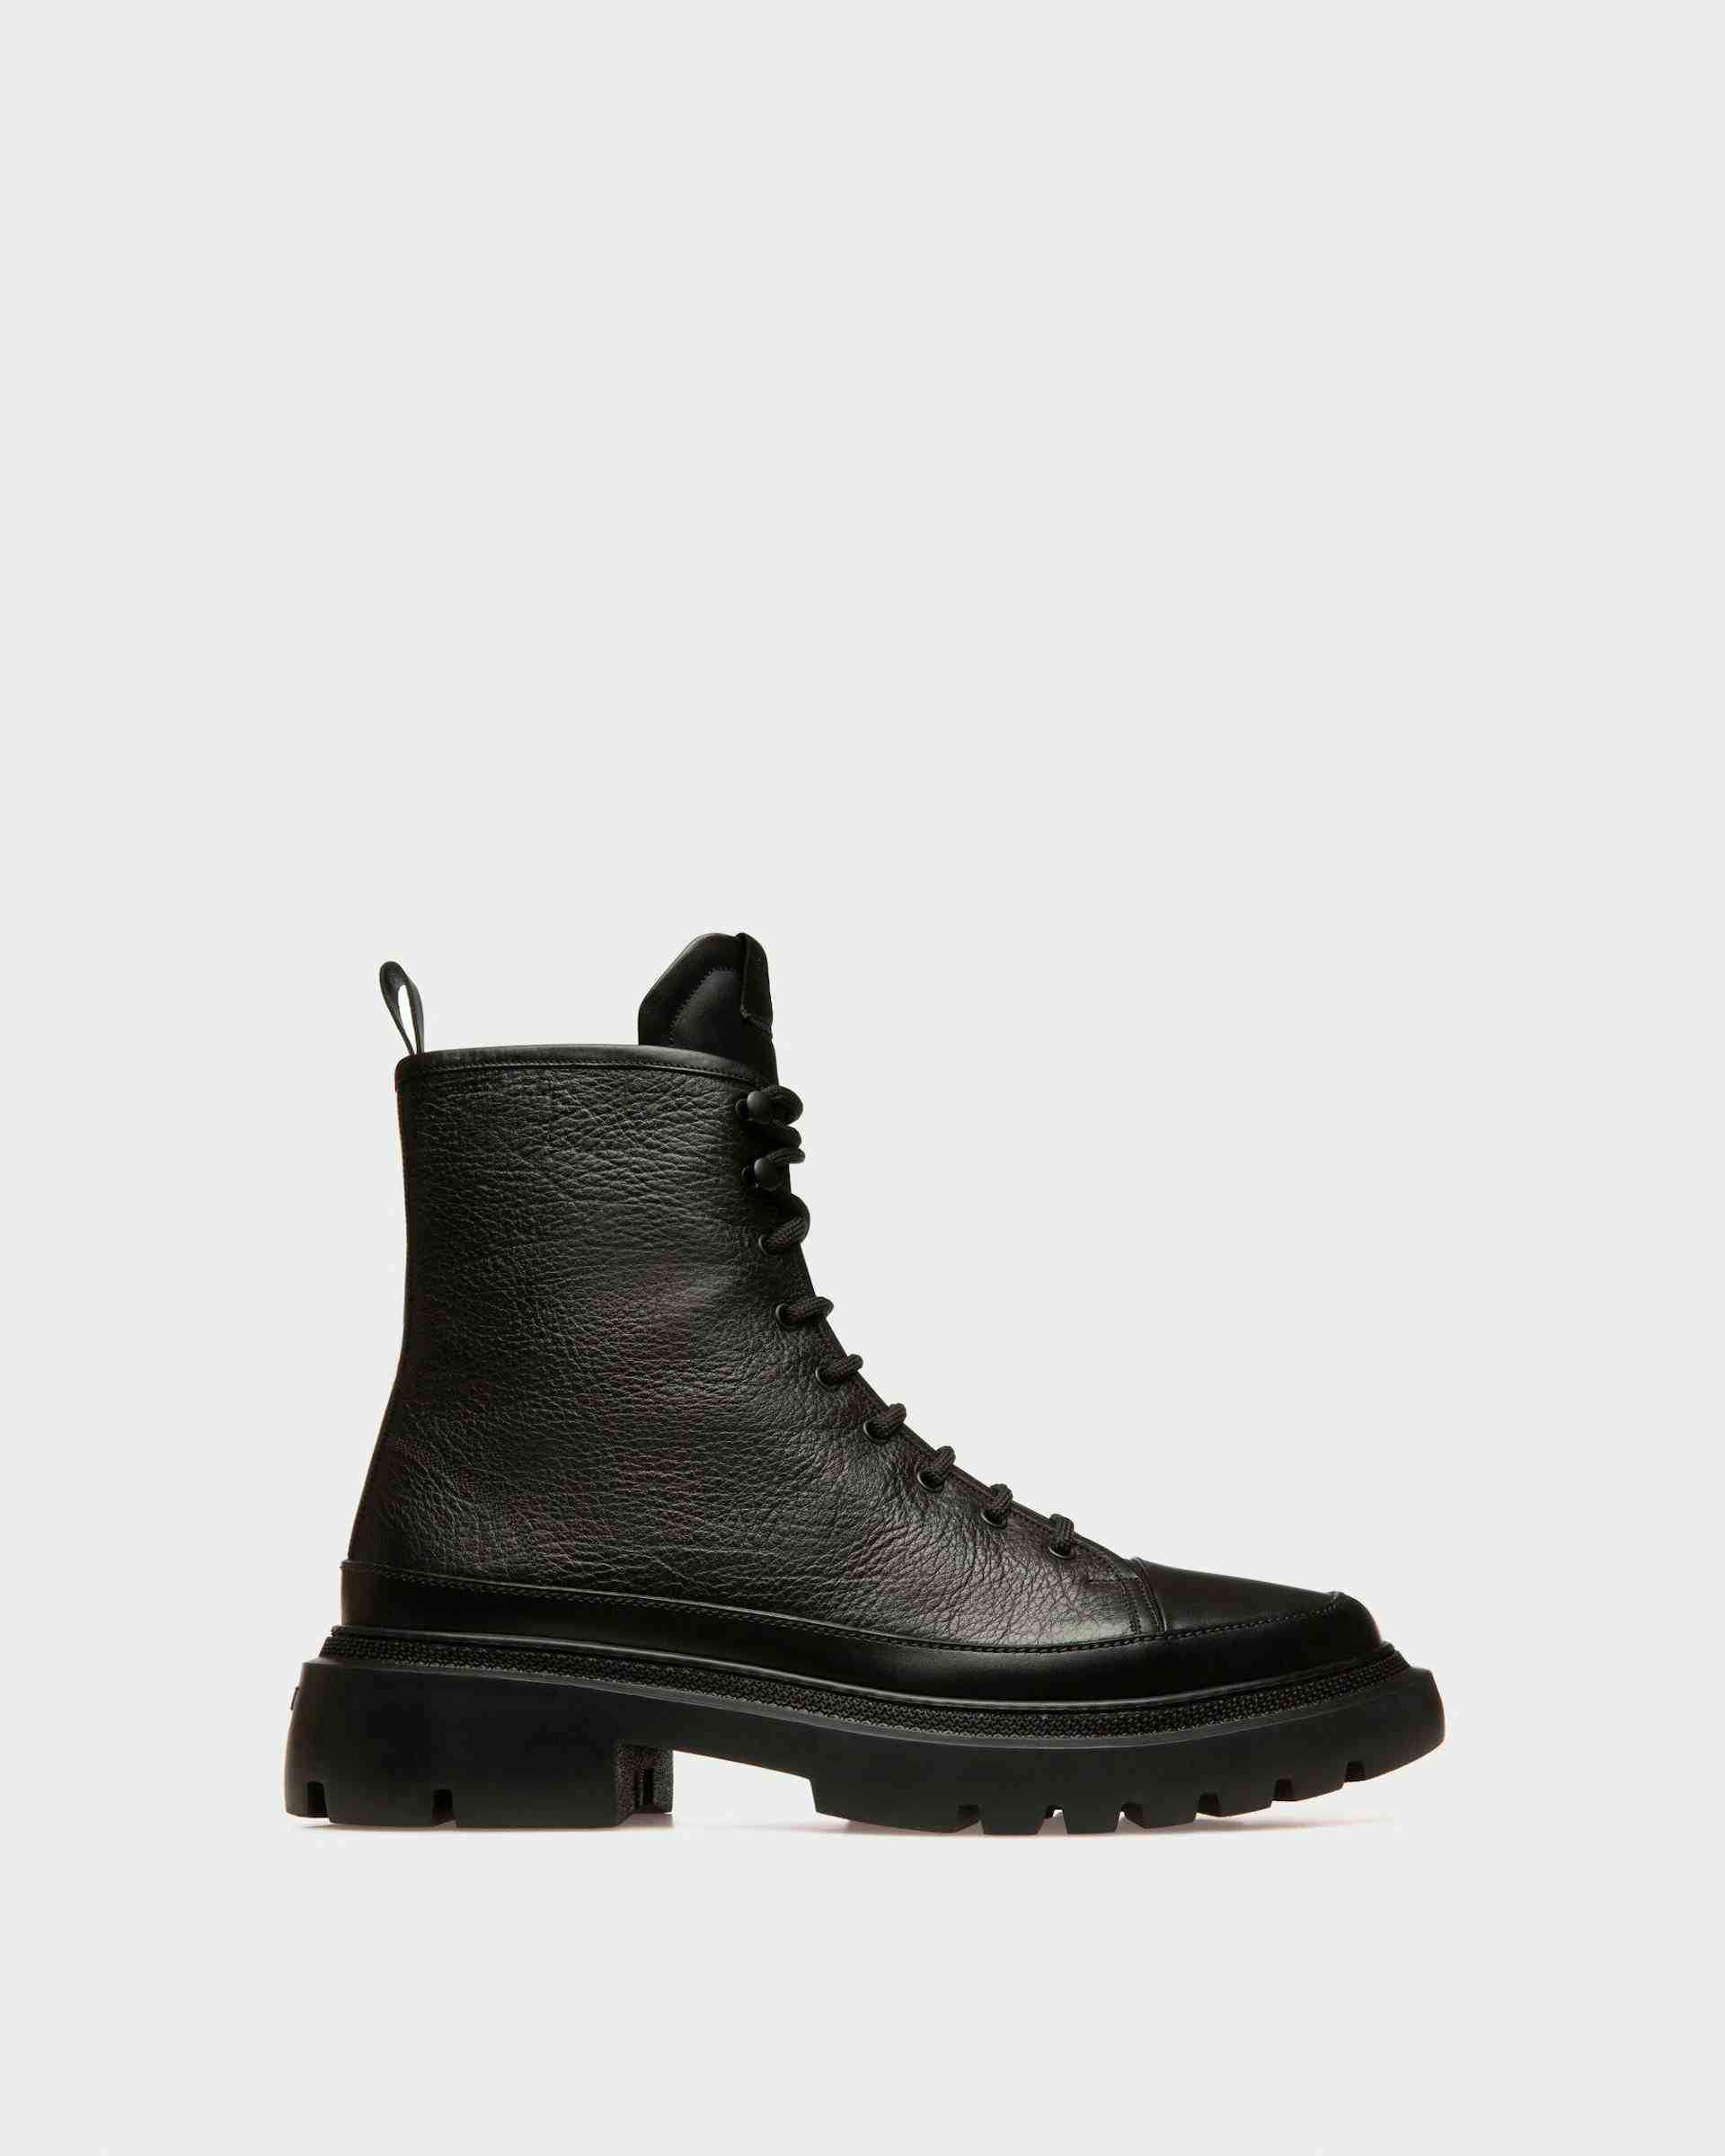 Vatiz Leather Boots In Black - Men's - Bally